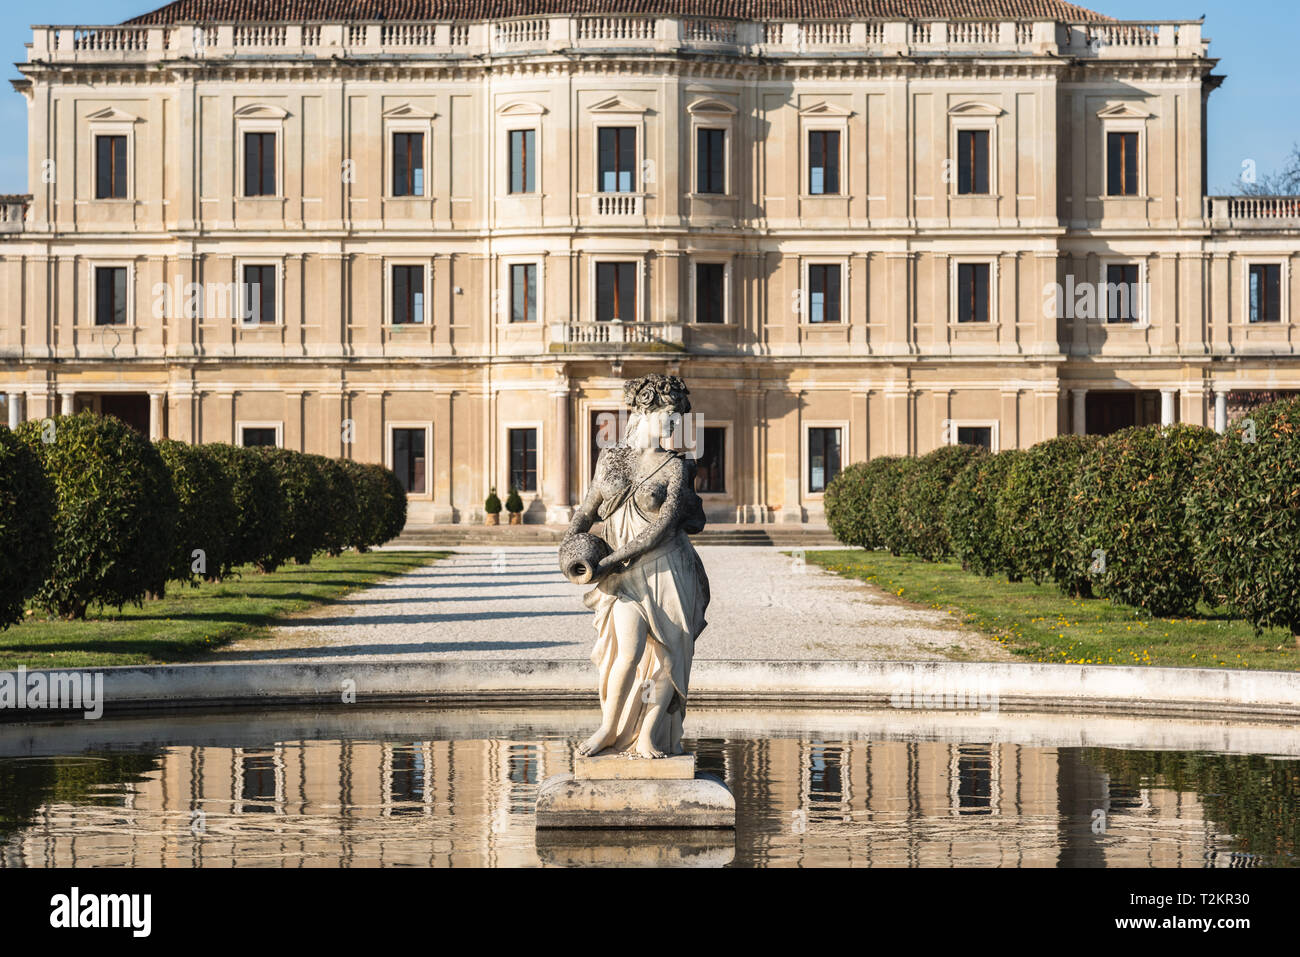 SANTA MARIA DI SALA, ES - März 30, 2019: Blick auf Villa Farsetti in Santa Maria di Sala in der Nähe Venedig Italien Stockfoto